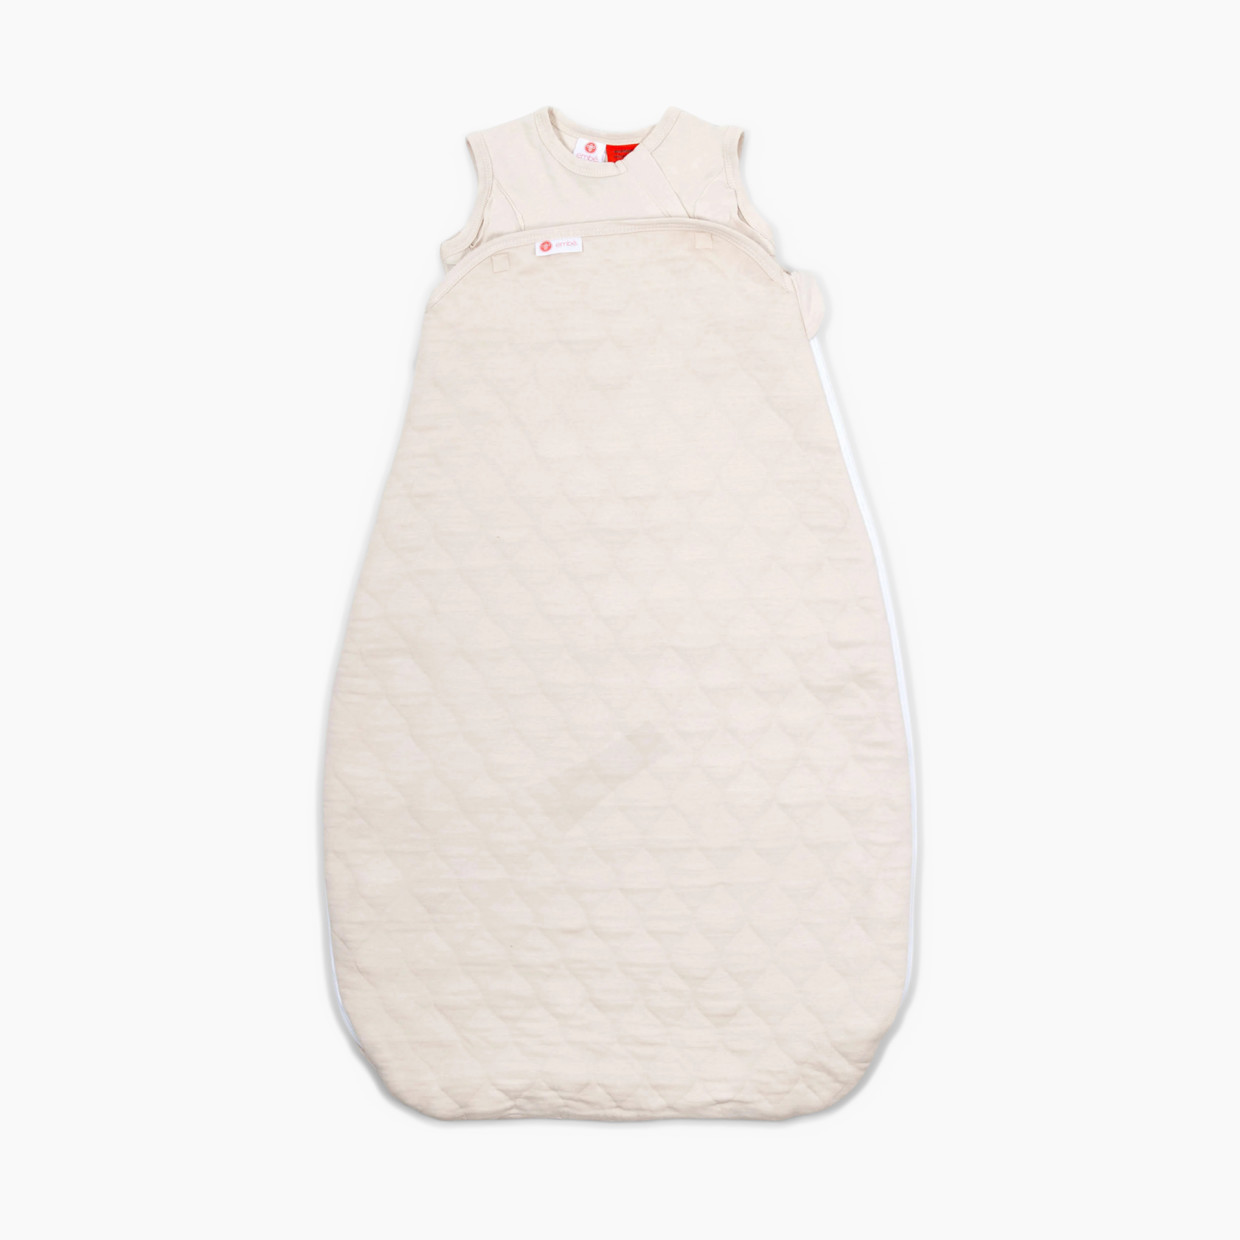 Embe Babies Laylo Sleeper Sack DUO - Cream, 6-24 M.